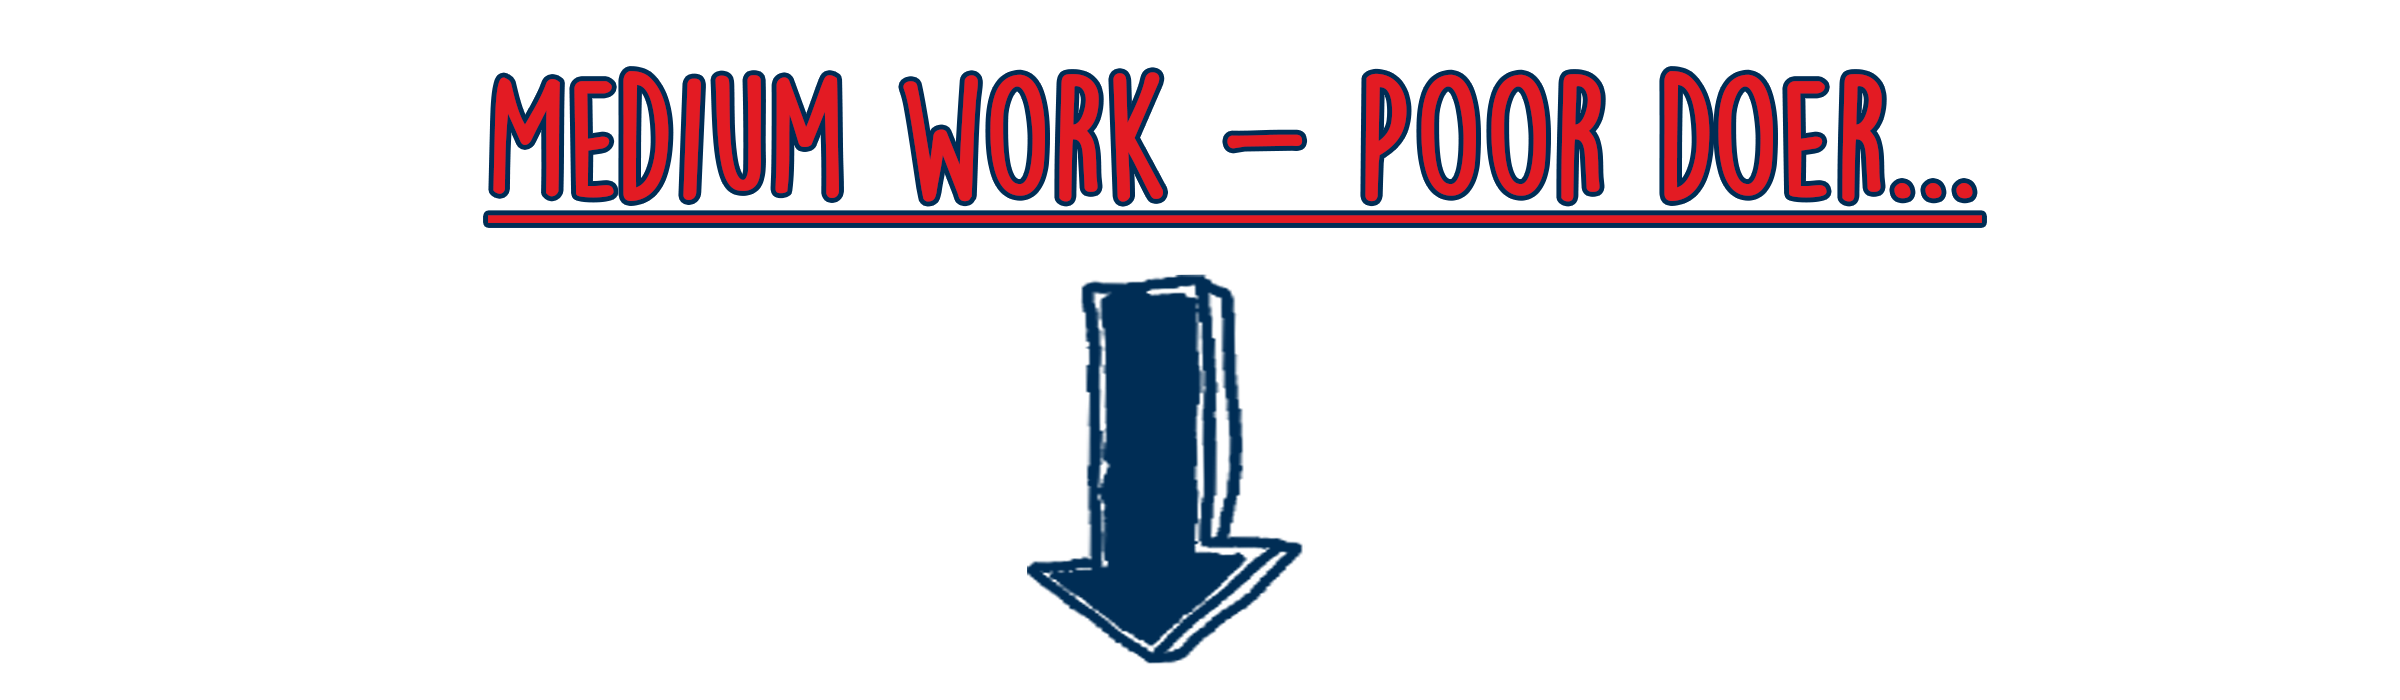 medium-work-poor-doer-2.png